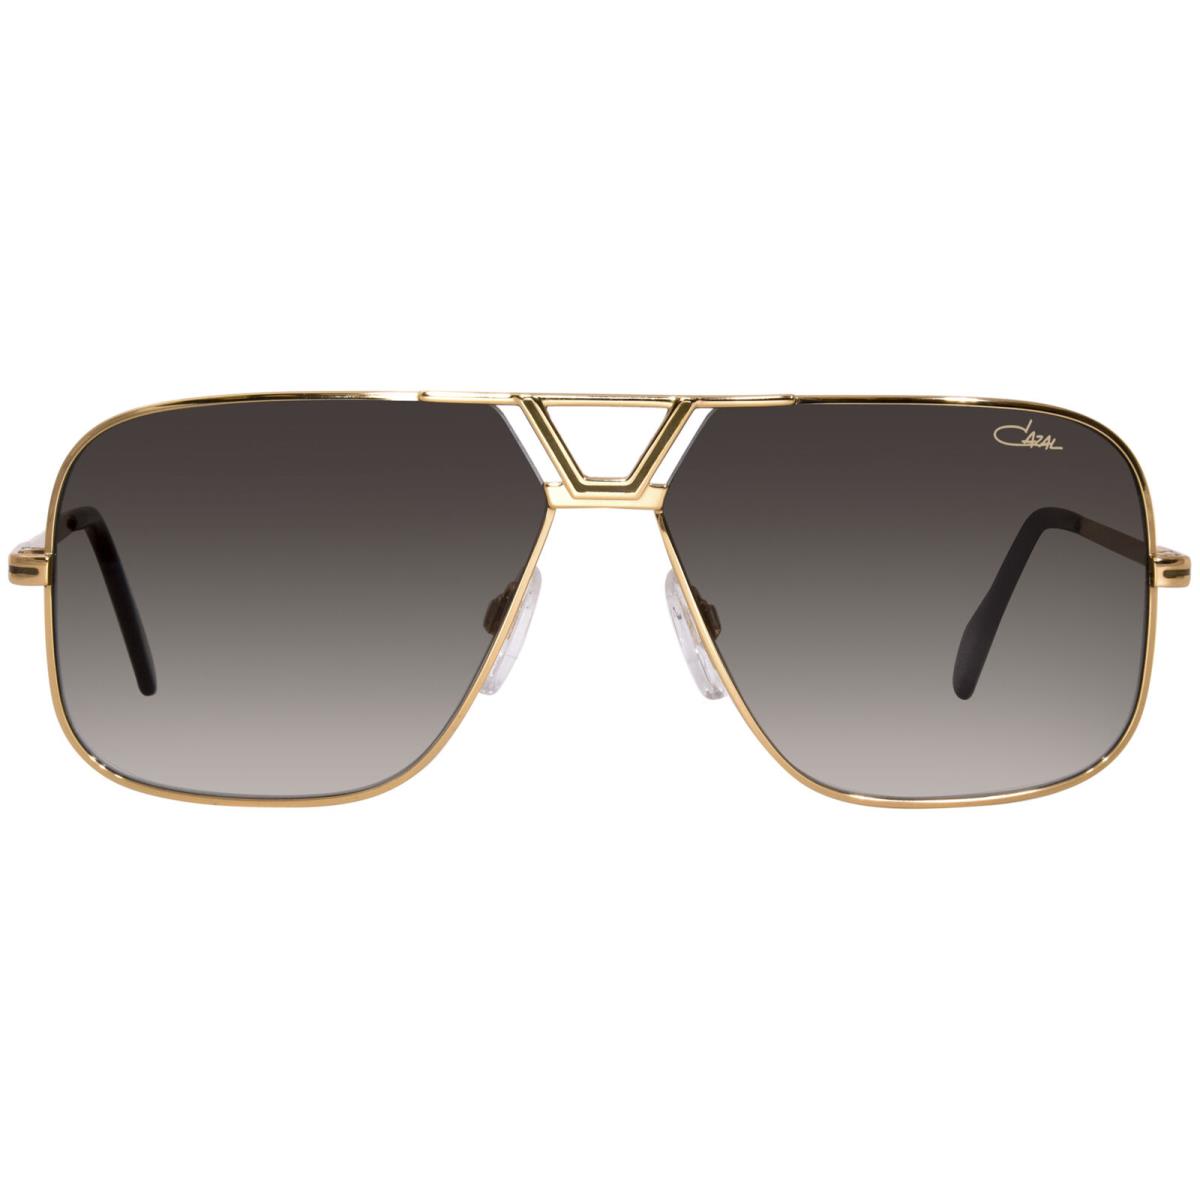 Cazal Legends 725 003 Sunglasses Men`s Gold/brown/green Gradient Lens Pilot 61mm